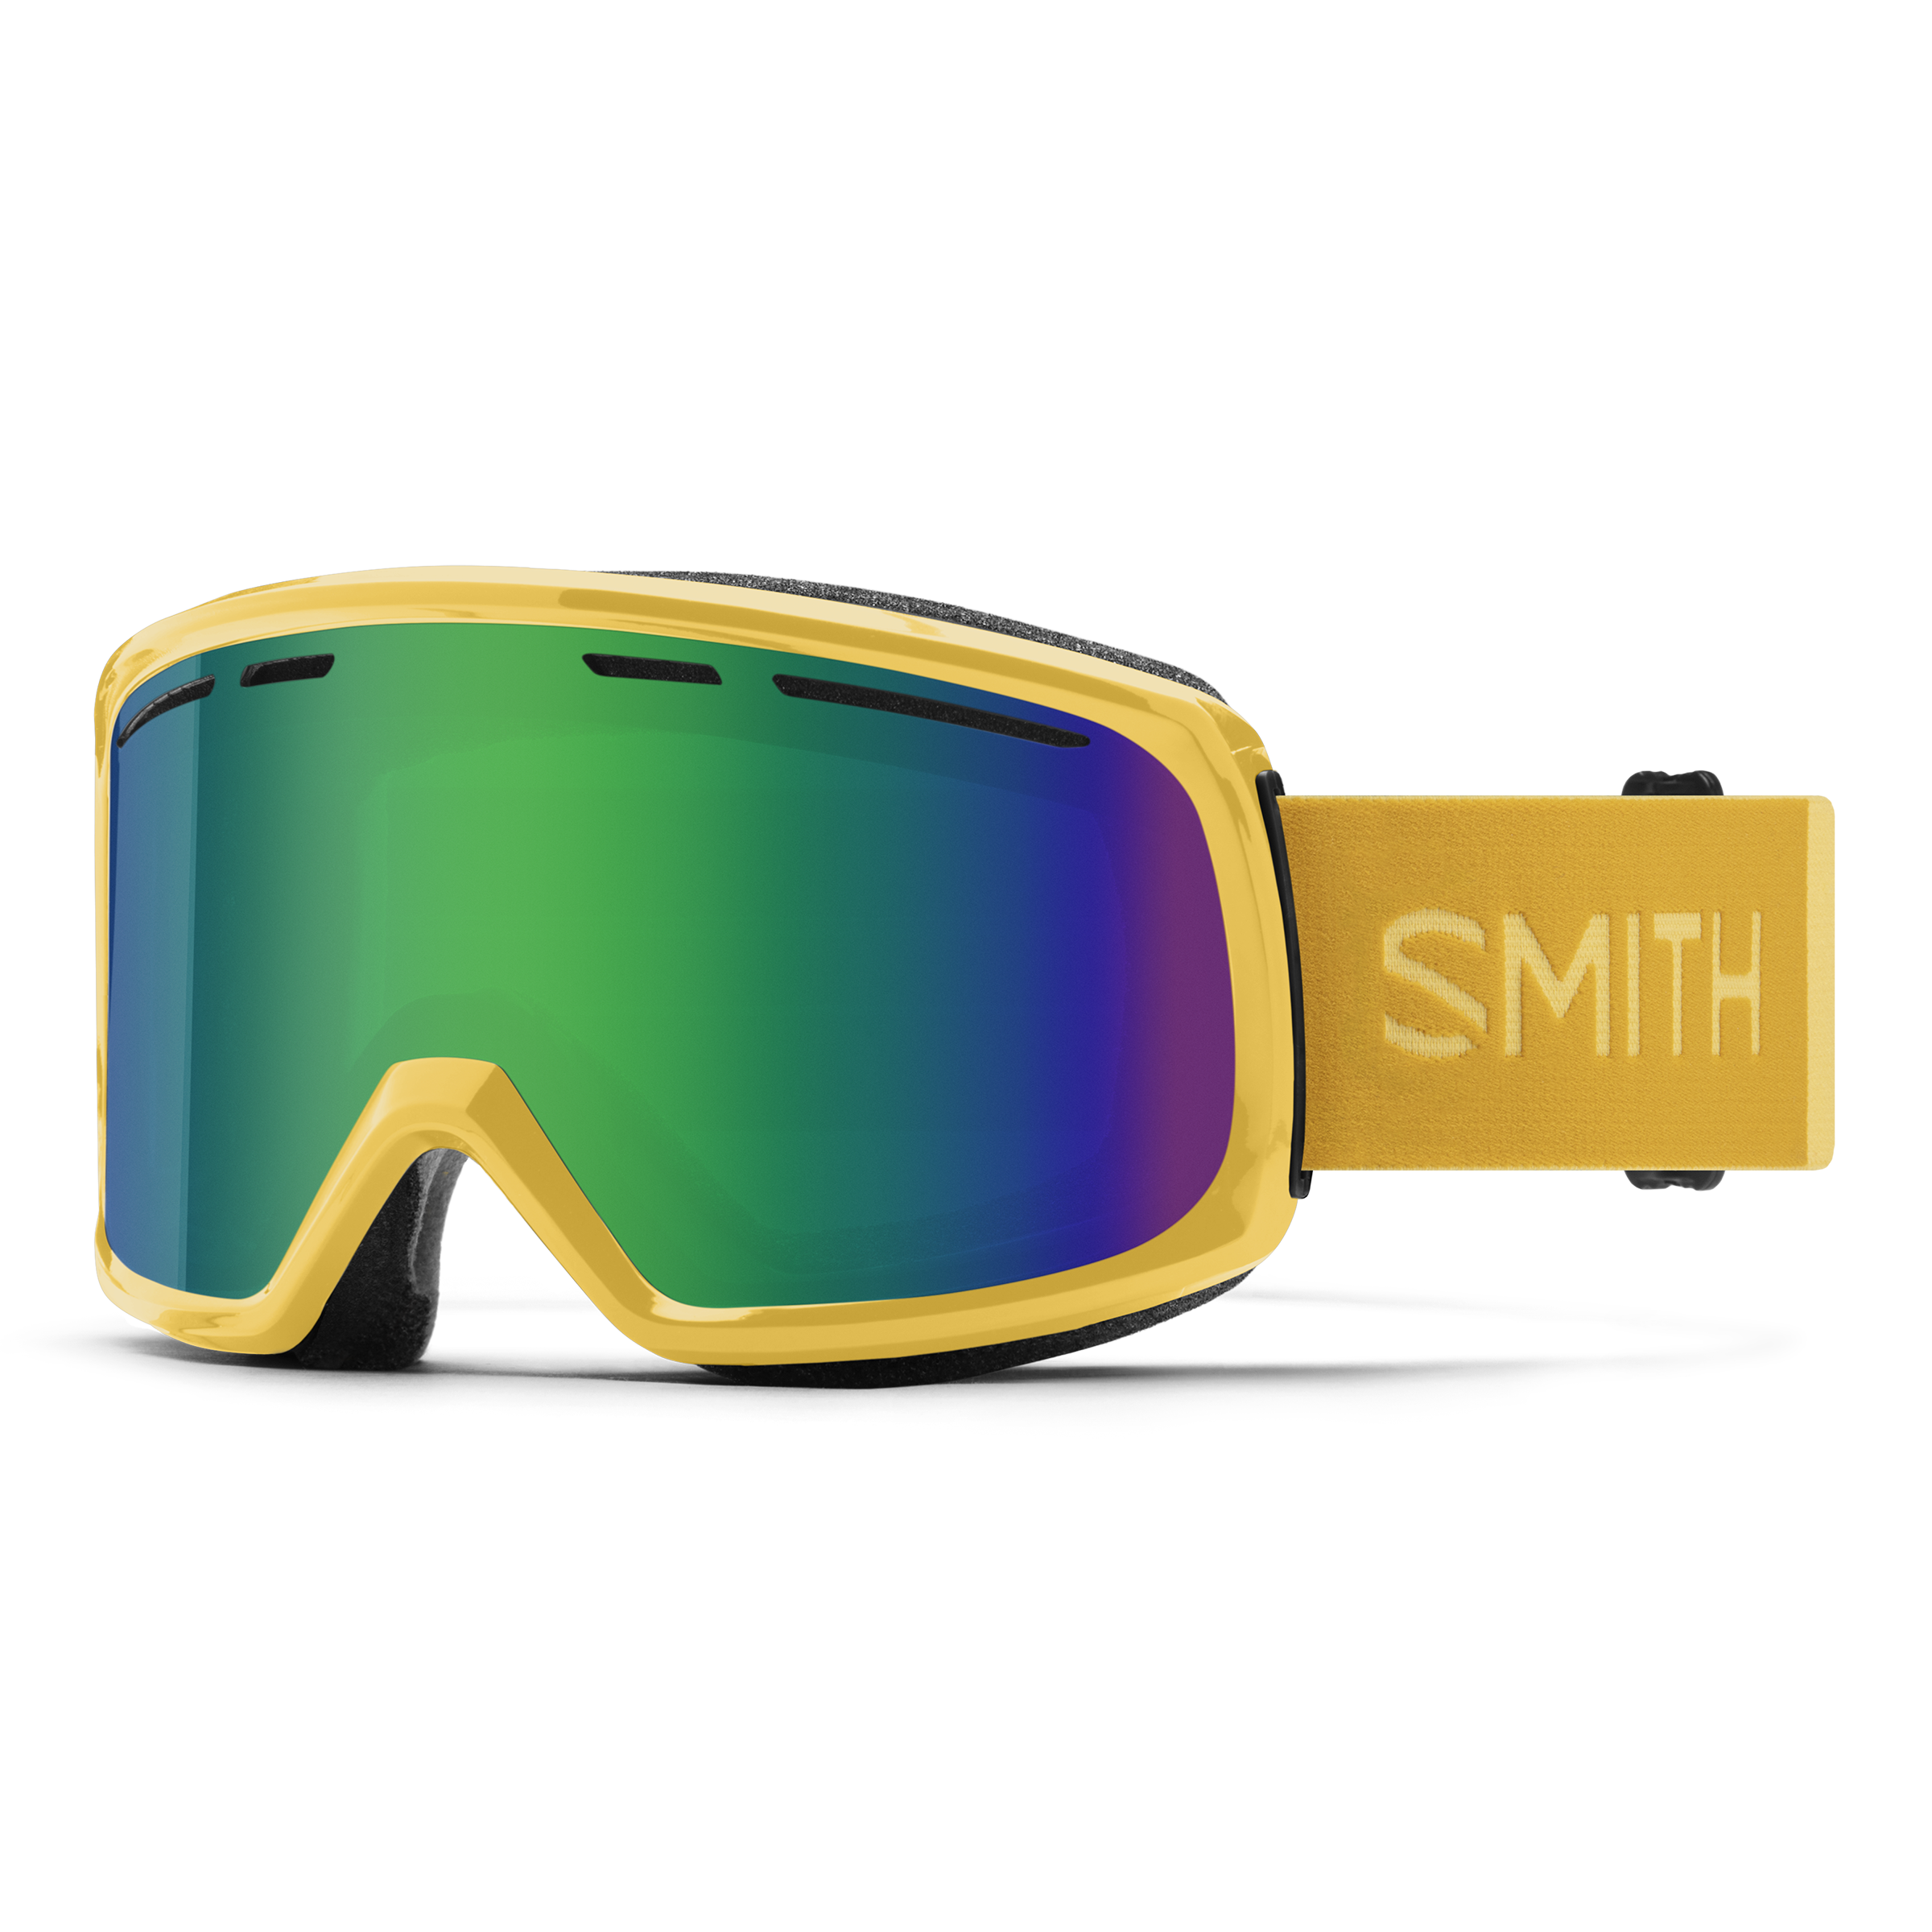 Details about   Smith Optics Stop Fog Orange Lens Snow Goggles NBS Forte USA Made NOS NWT